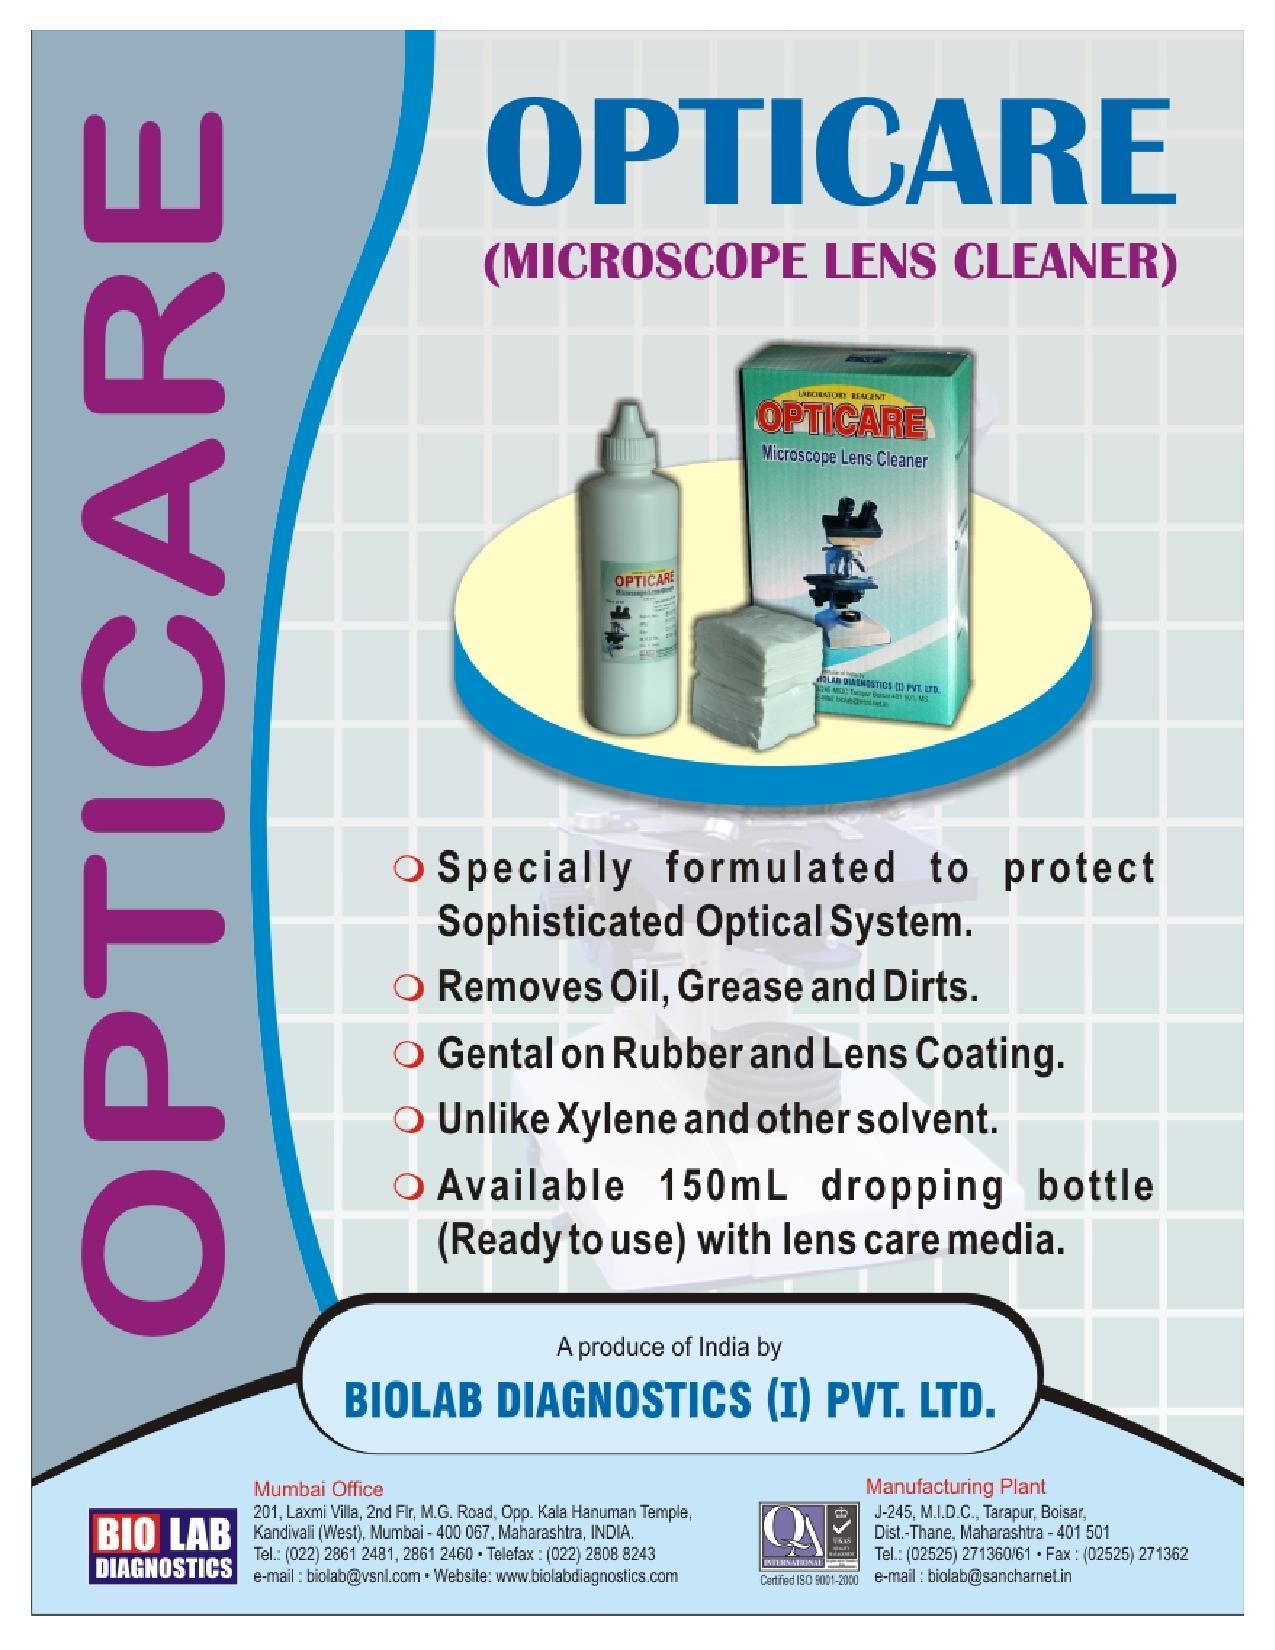 OPTICARE - MICROSCOPE LENS CLEANER